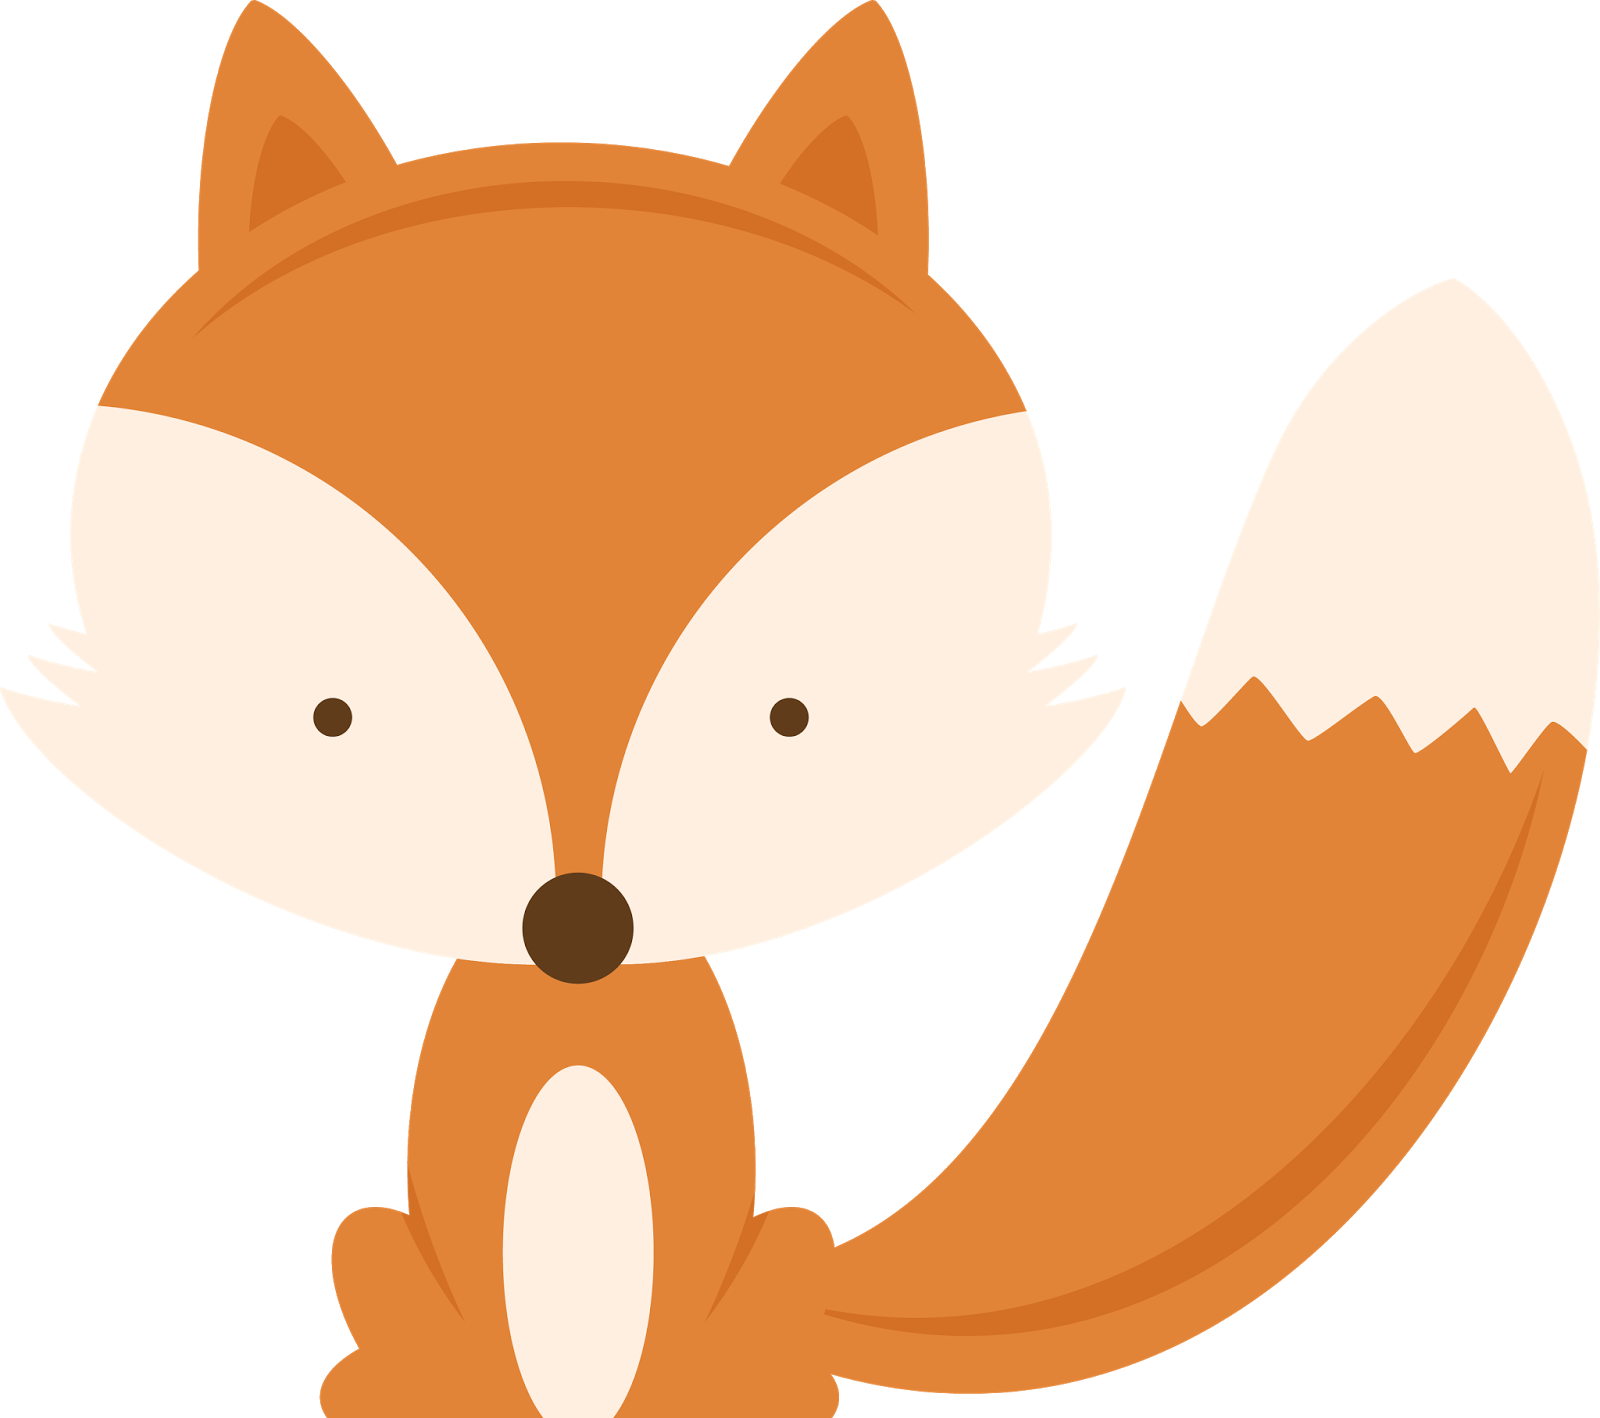 Fox clipart baby fox, Fox baby fox Transparent FREE for